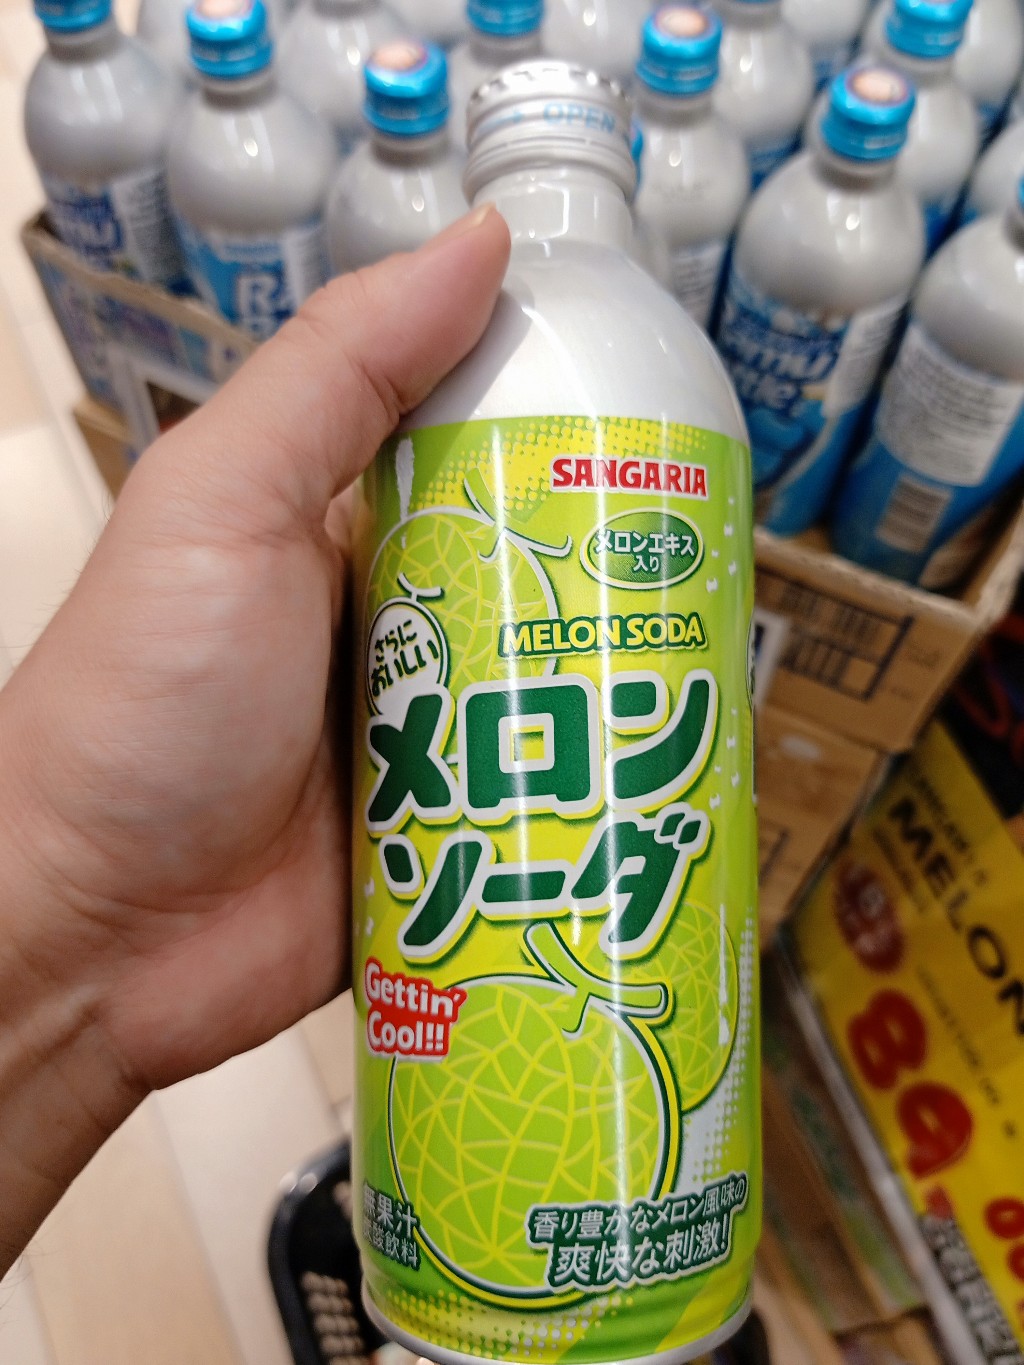 ecook ญี่ปุ่น เครื่องดืม เมลอน โซดา dk sangaria melon soda 500ml